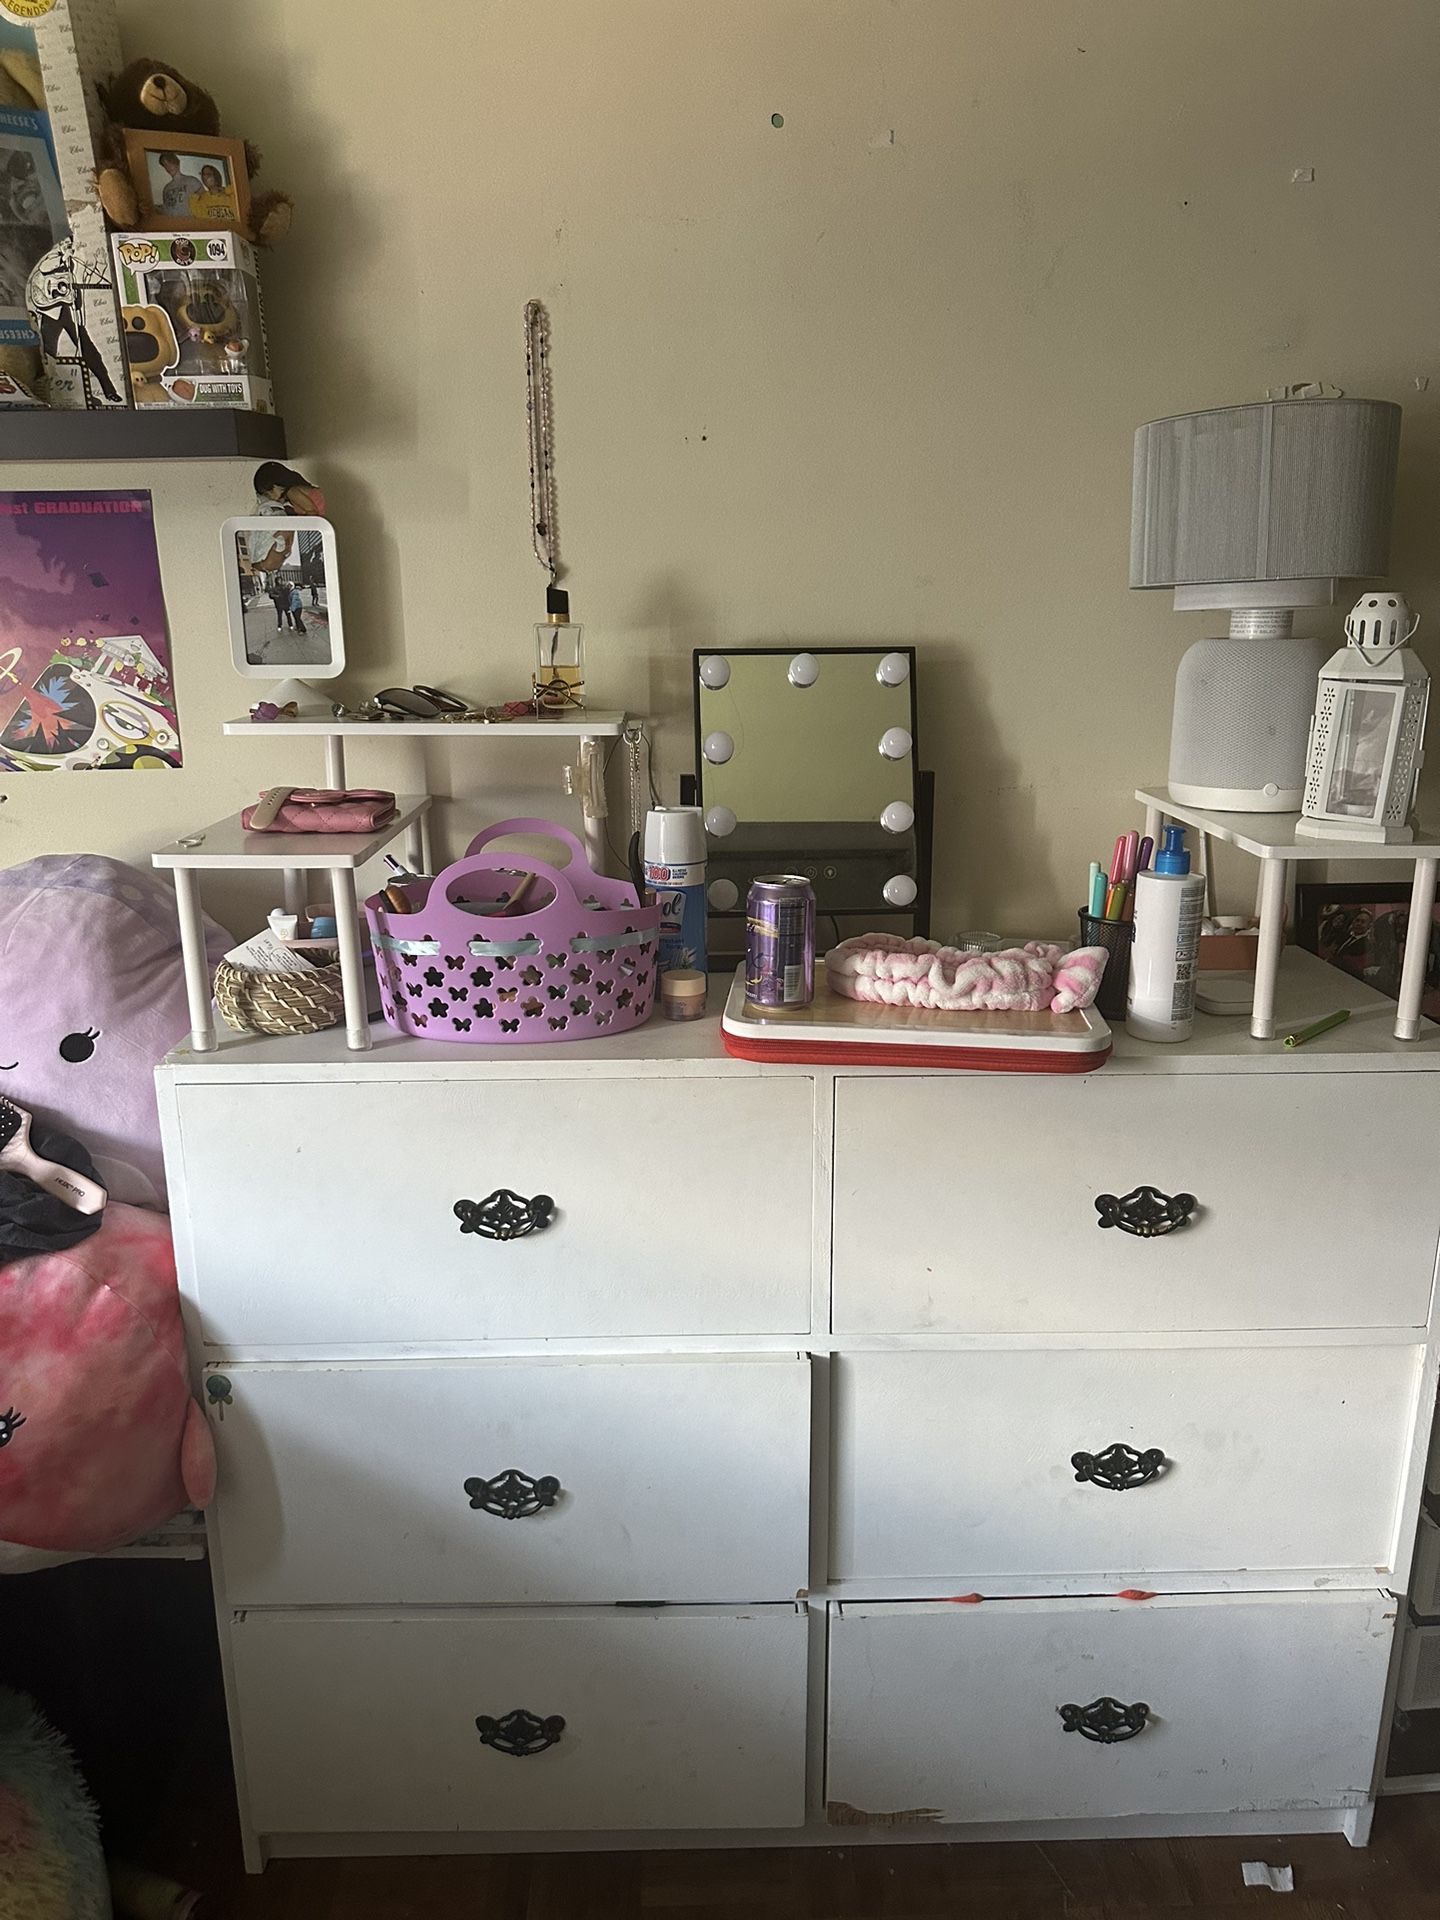 6 Drawer Cabinet / Dresser